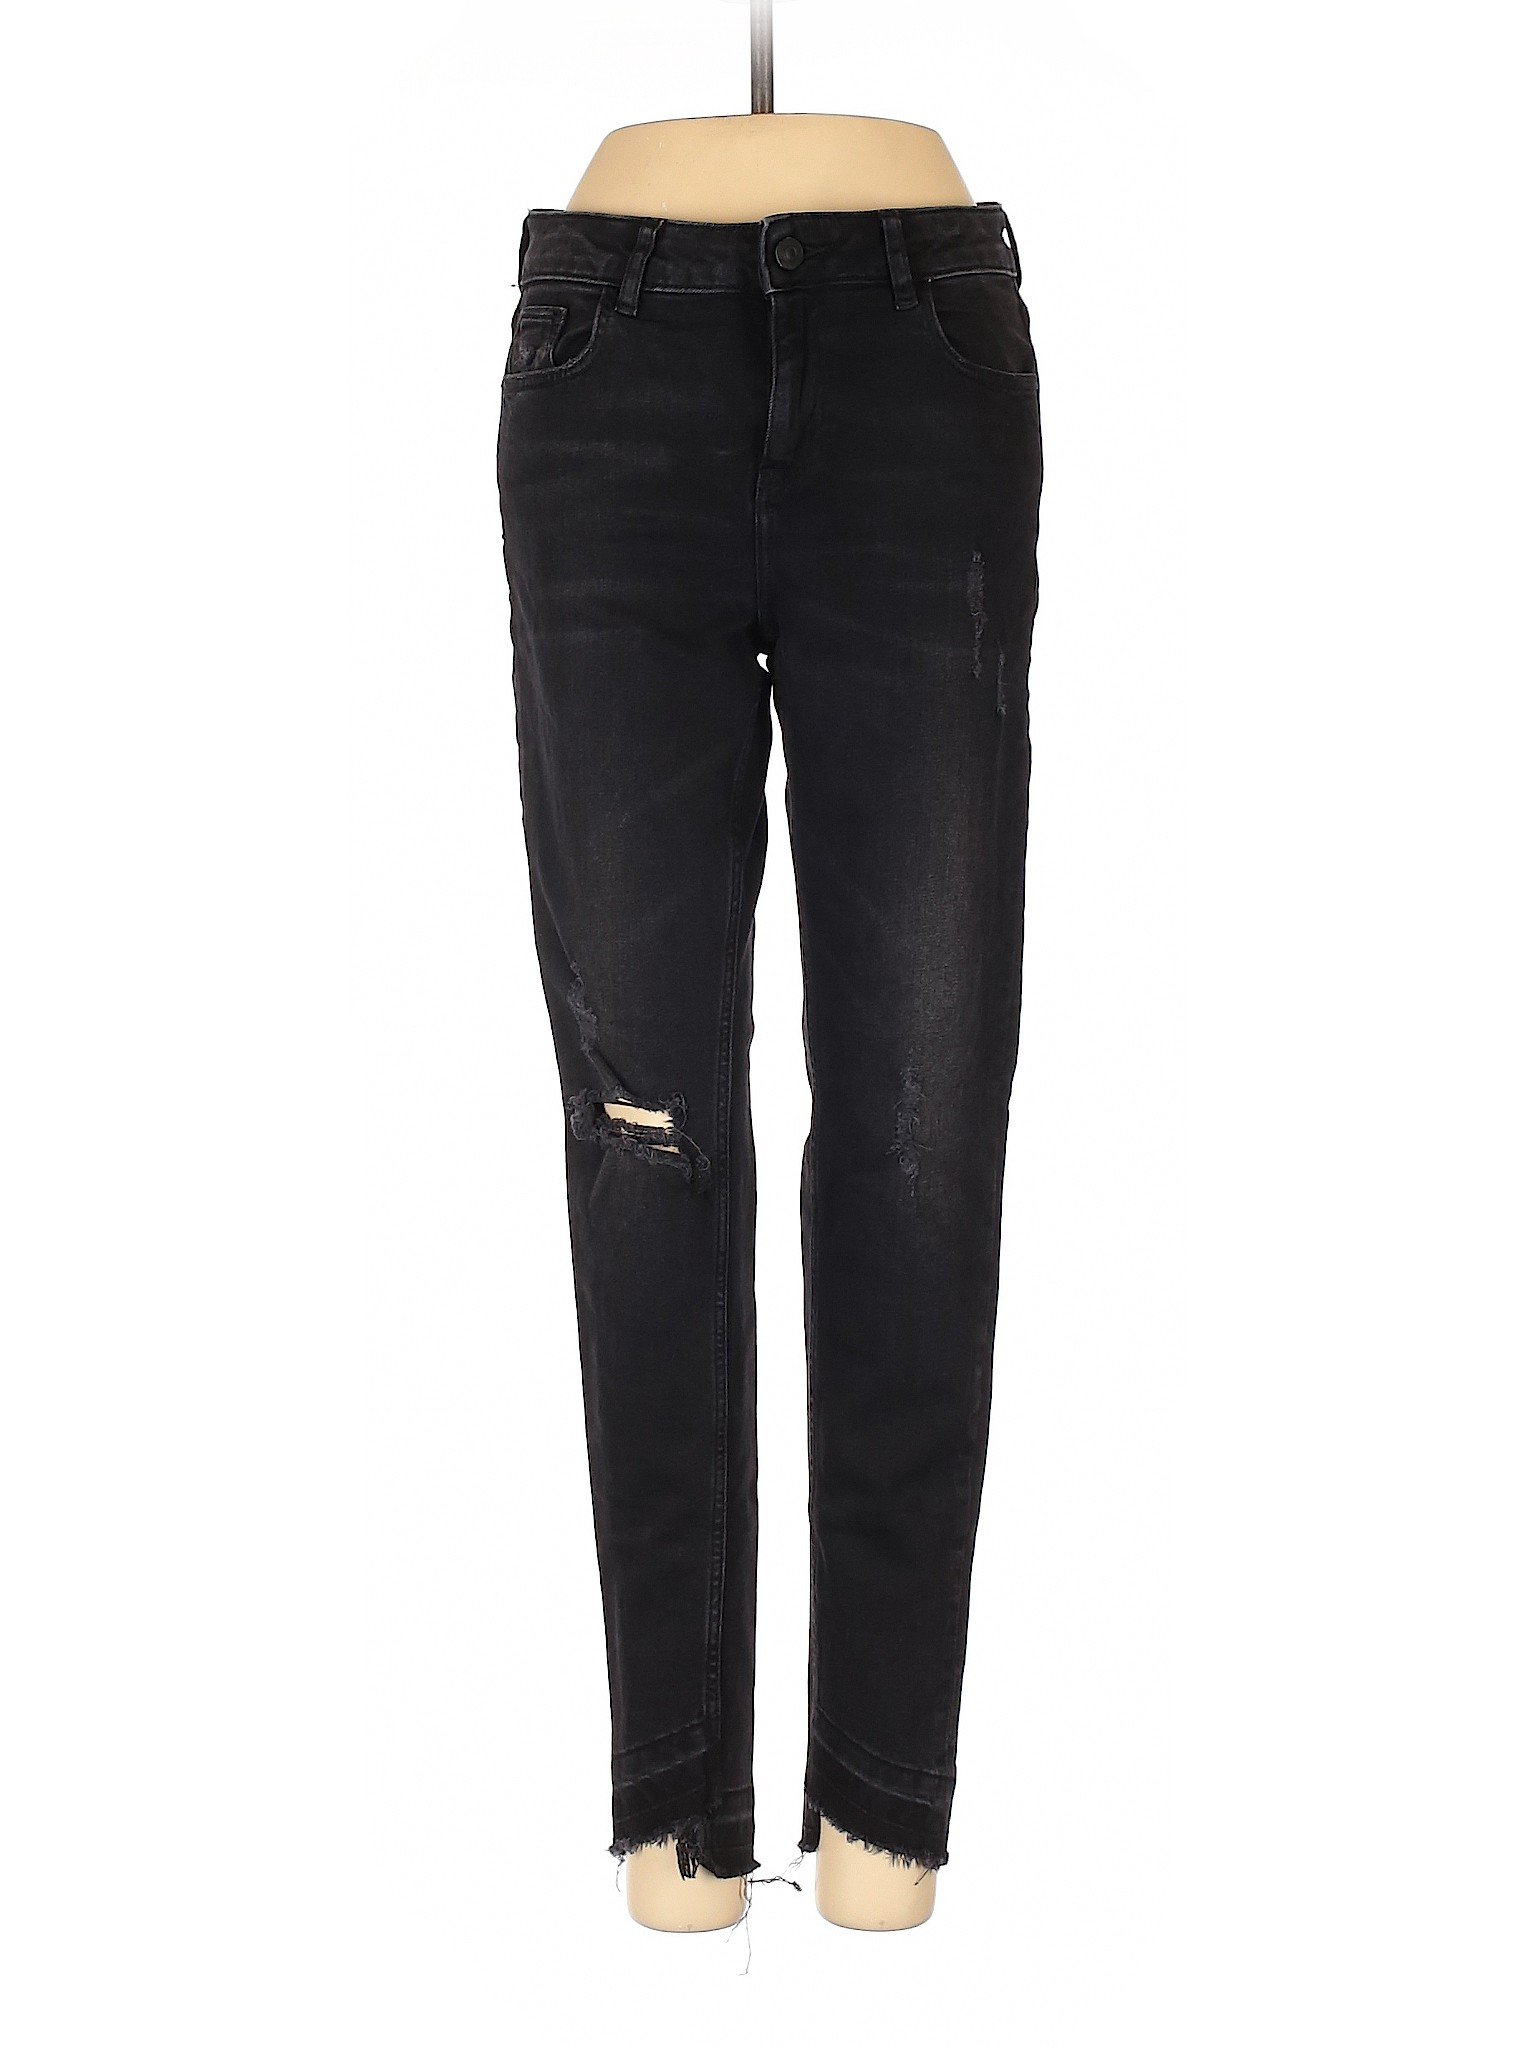 Zara Basic Women Black Jeans 2 | eBay